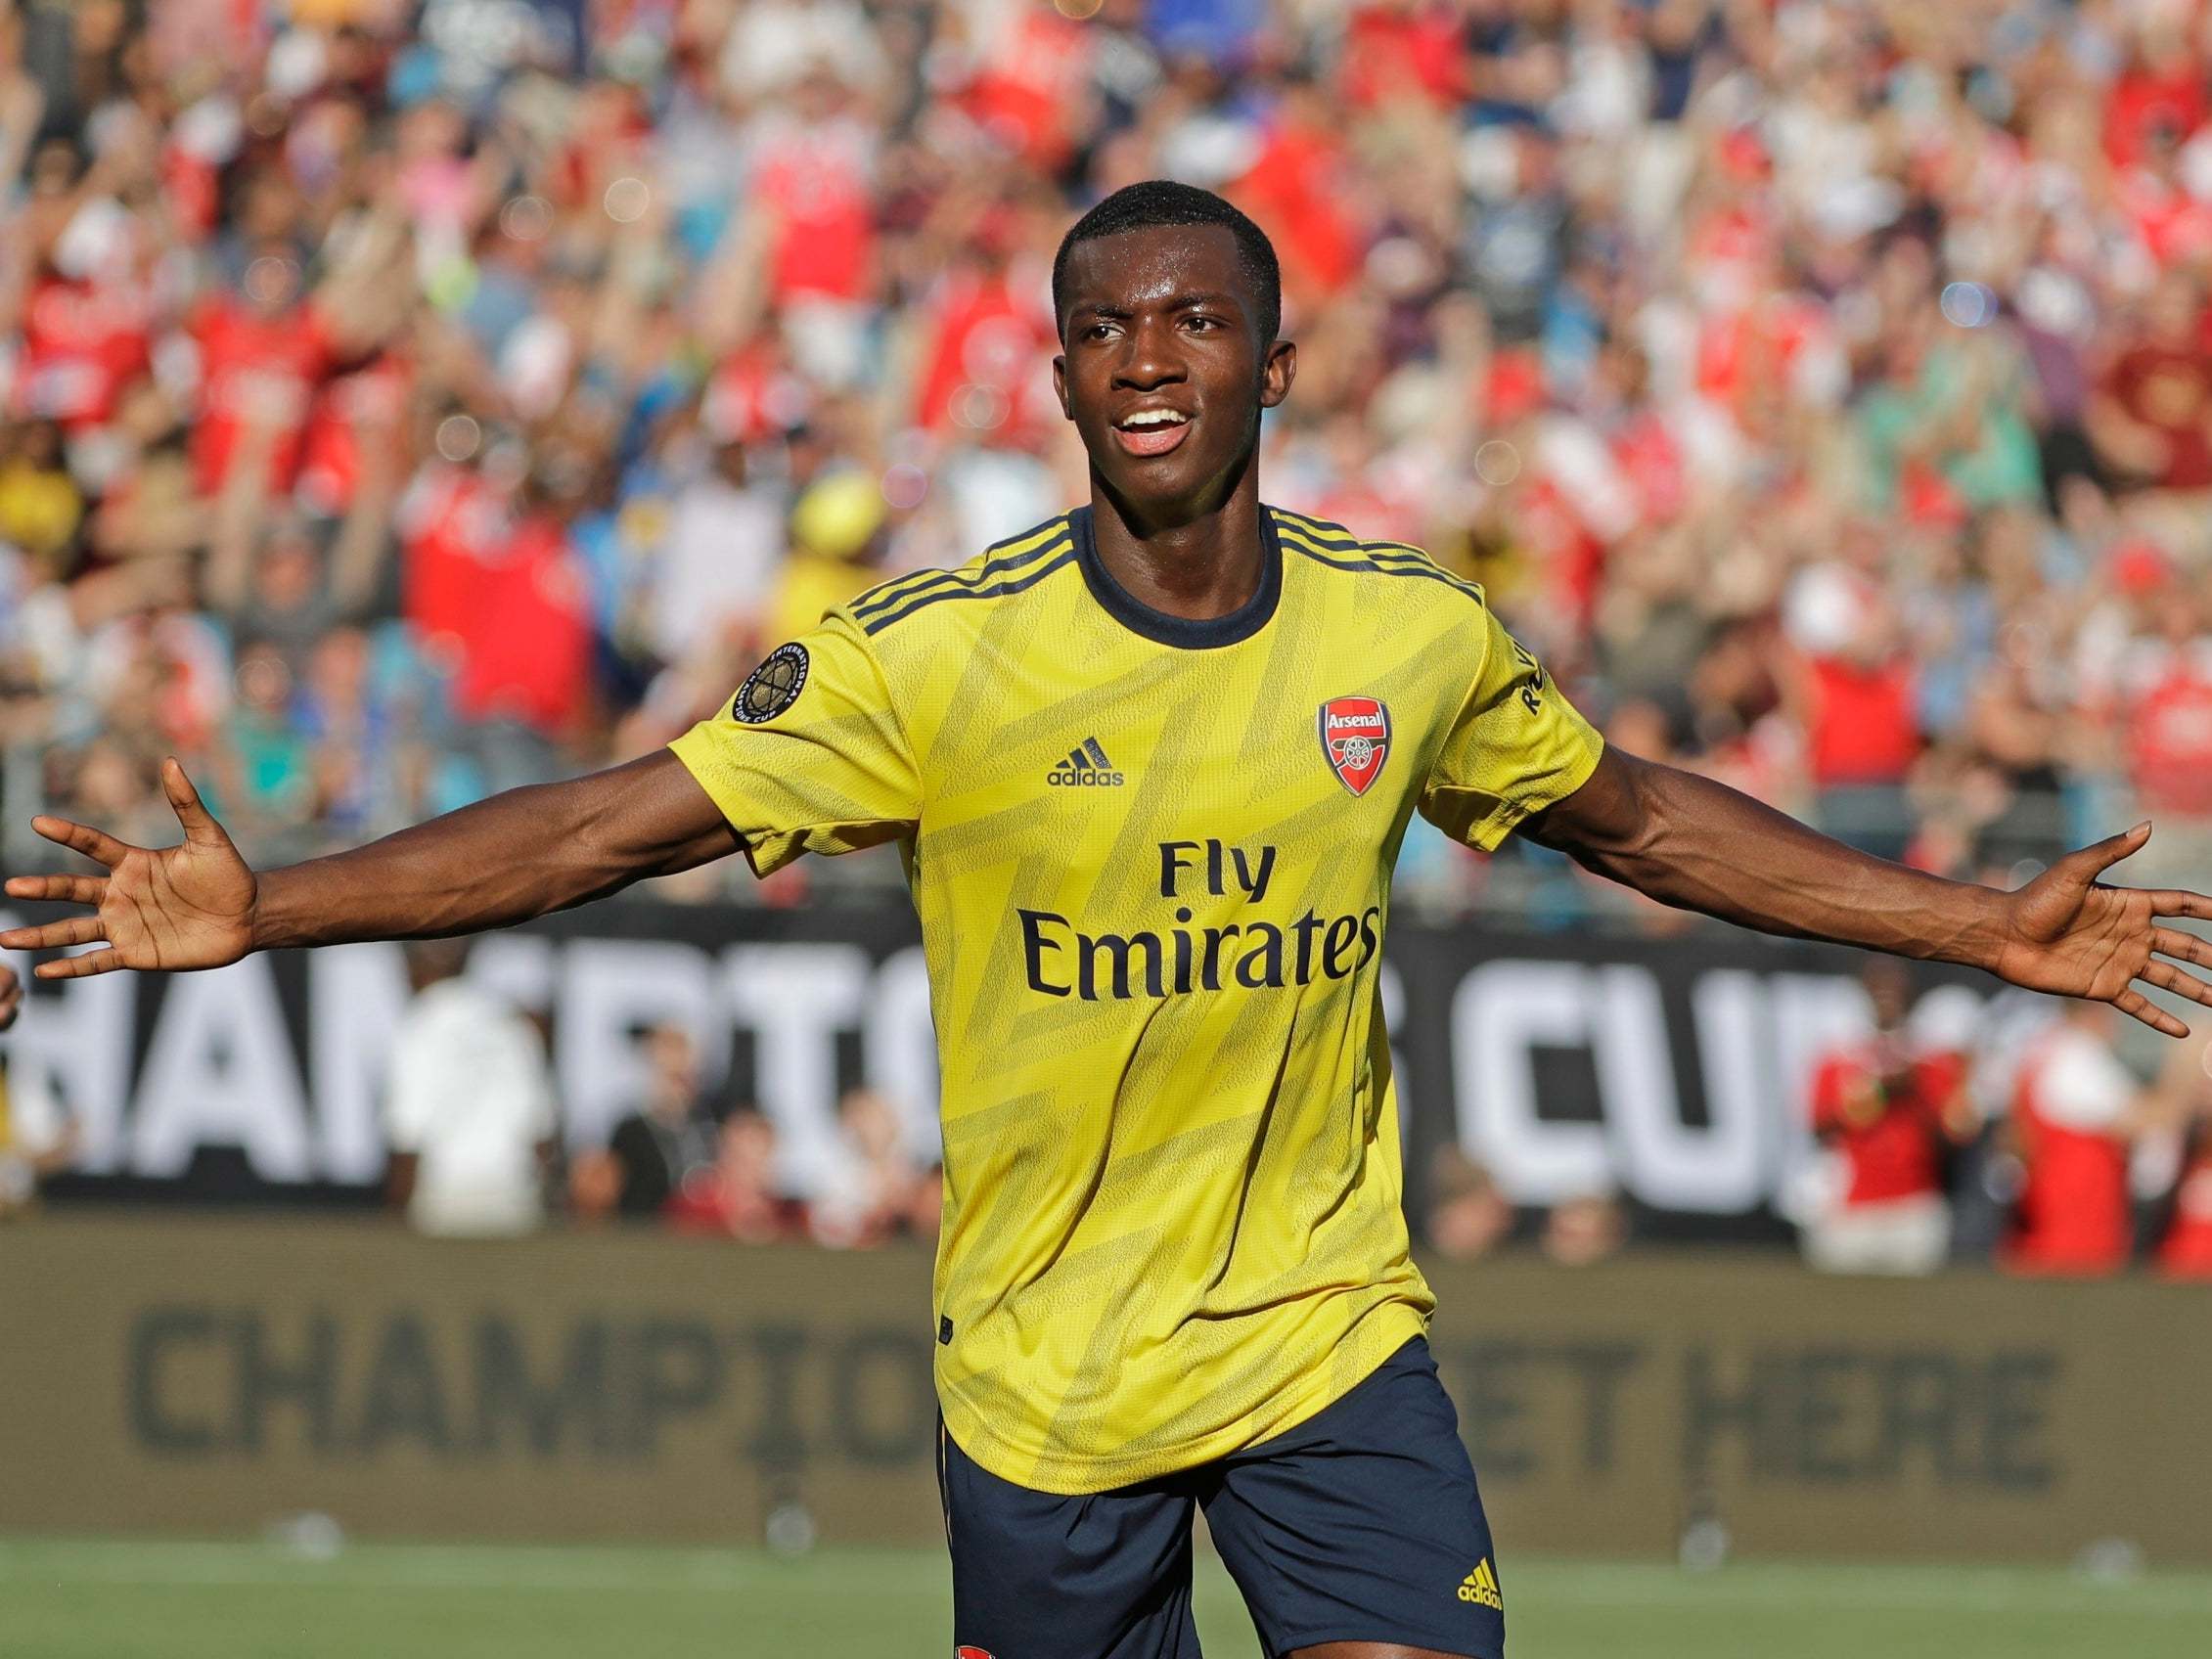 Arsenal’s Eddie Nketiah celebrates after scoring a goal